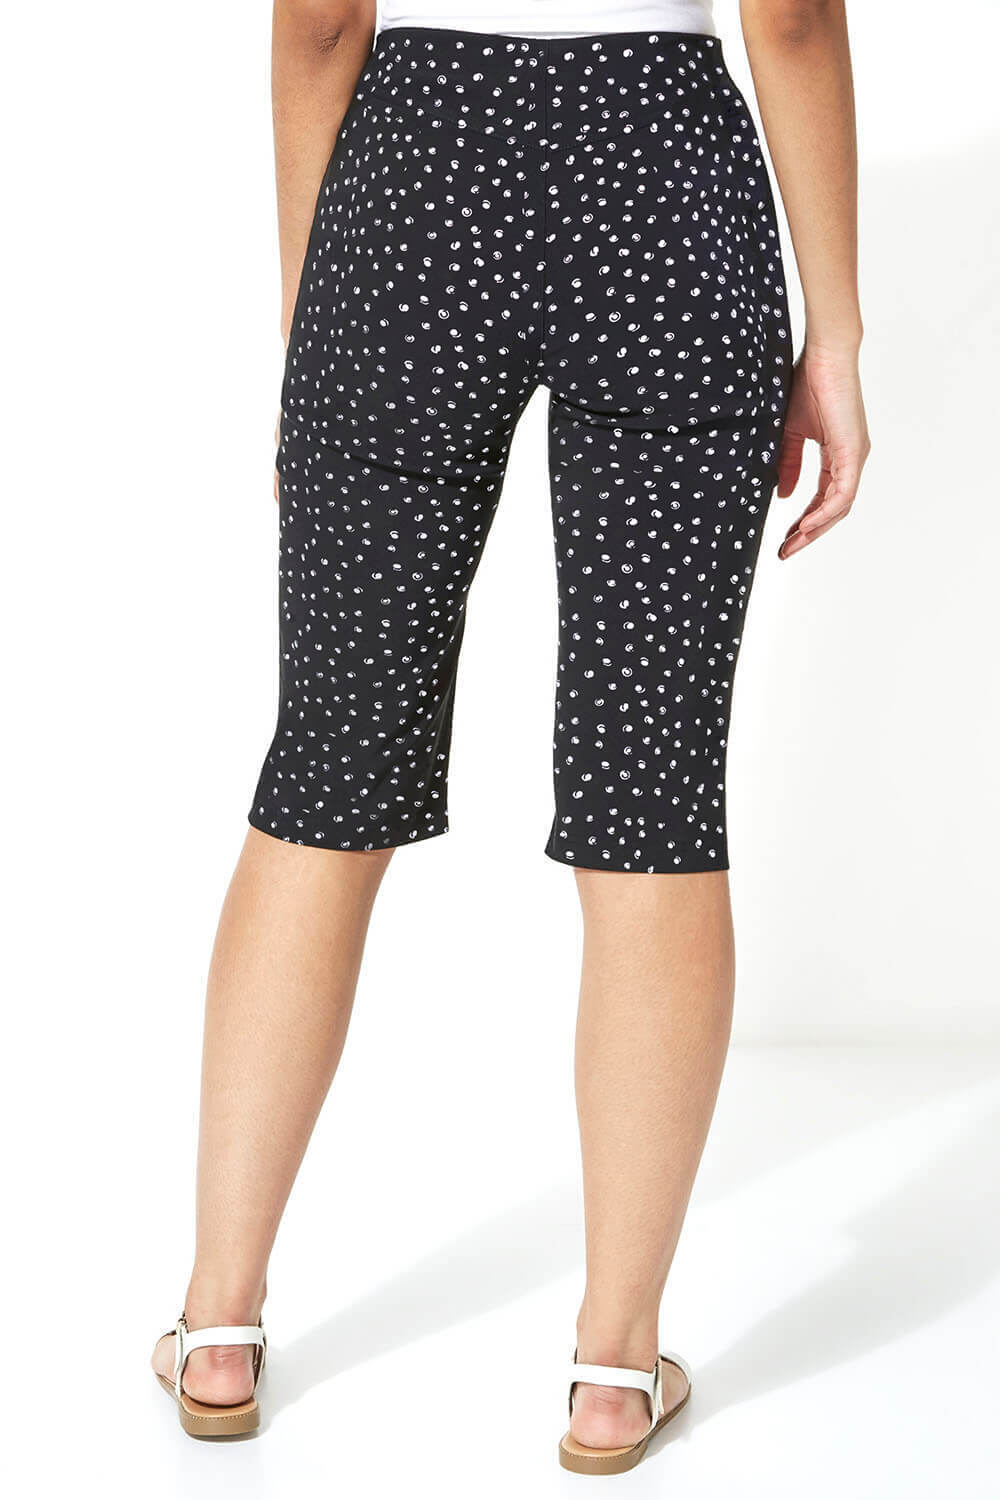 Black Polka Dot Stretch Knee Length Shorts, Image 2 of 4